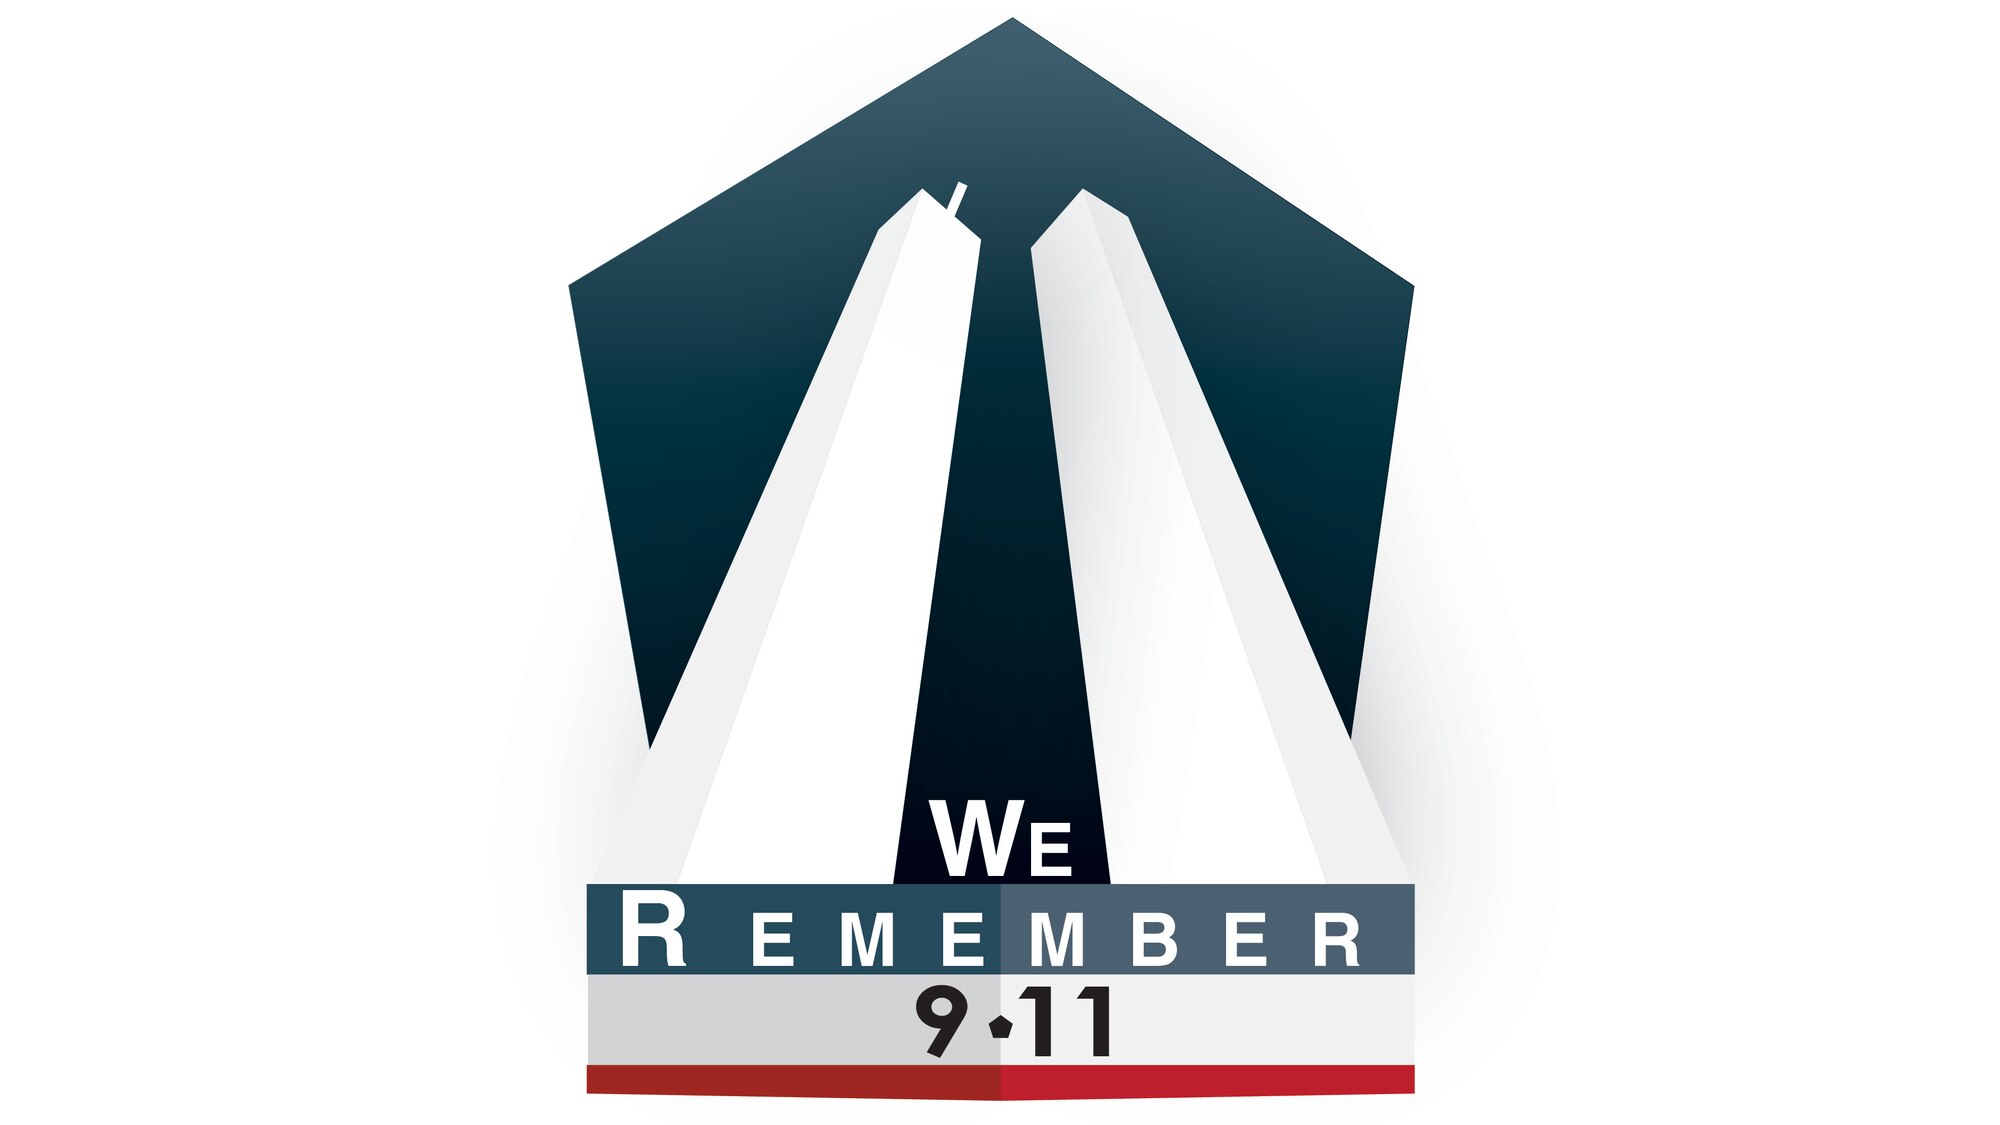 9/11 graphic